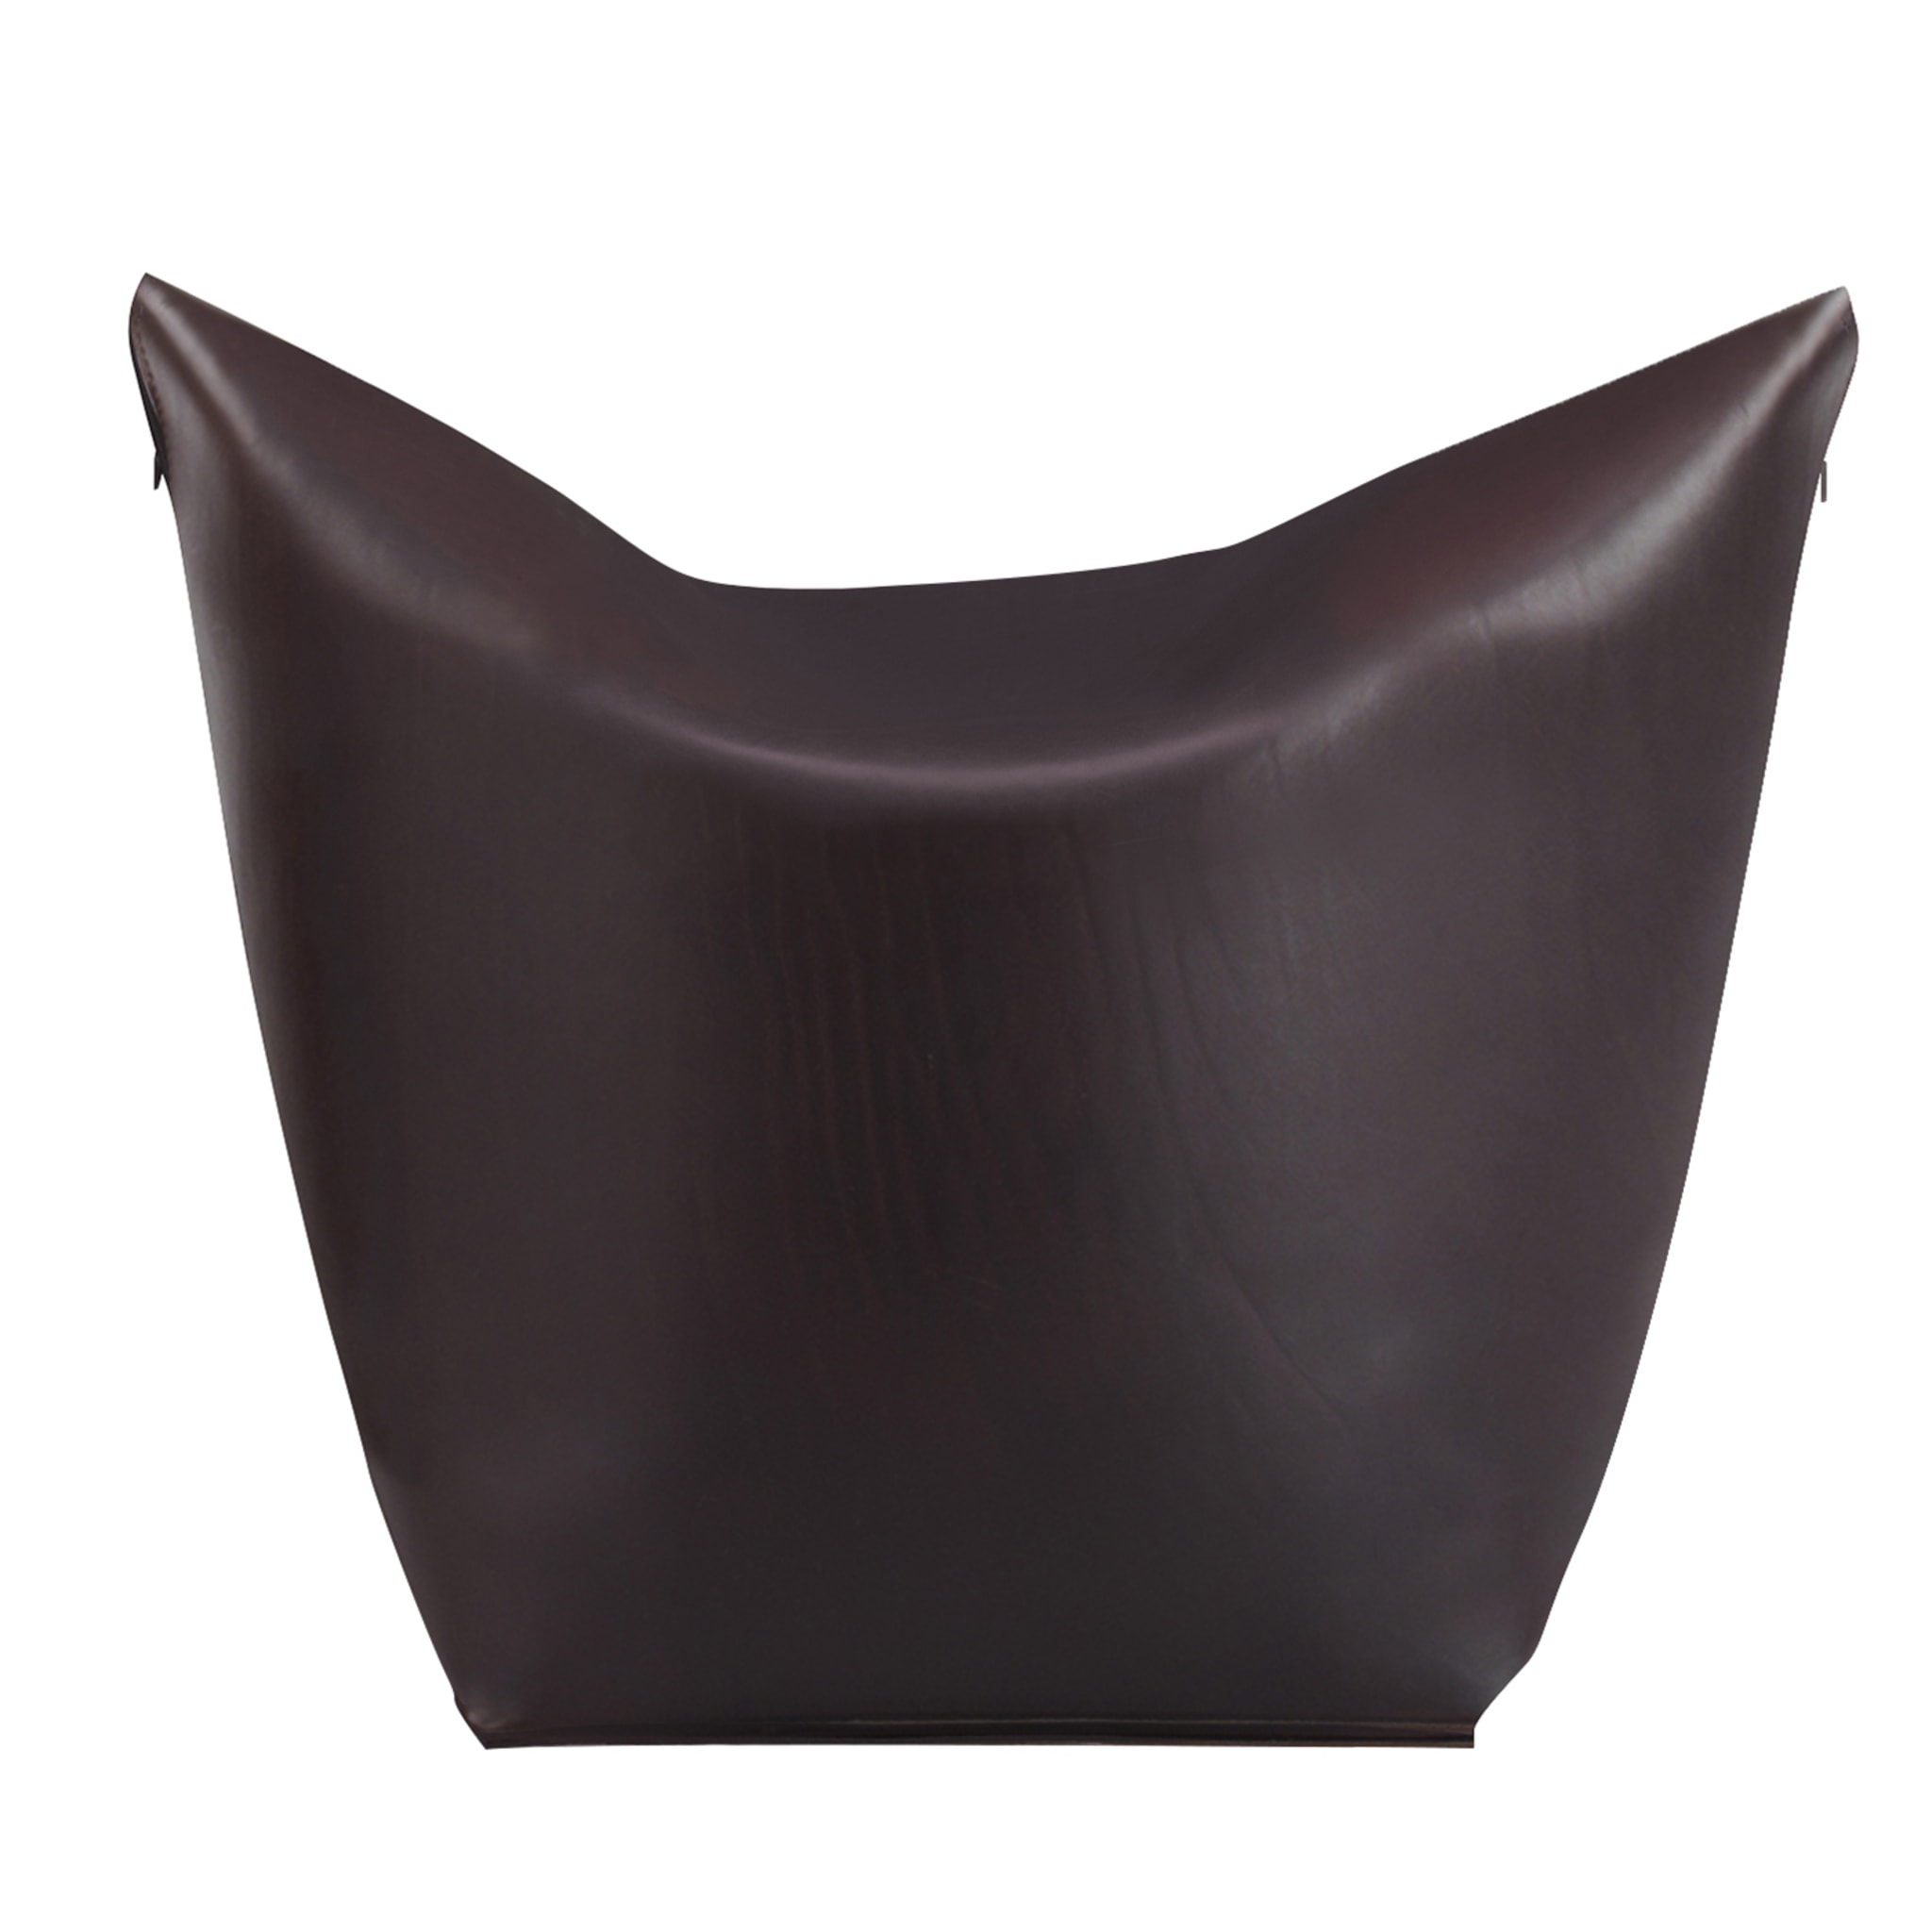 Mao Dark Brown Leather Bag Chair by Viola Tonucci - Main view